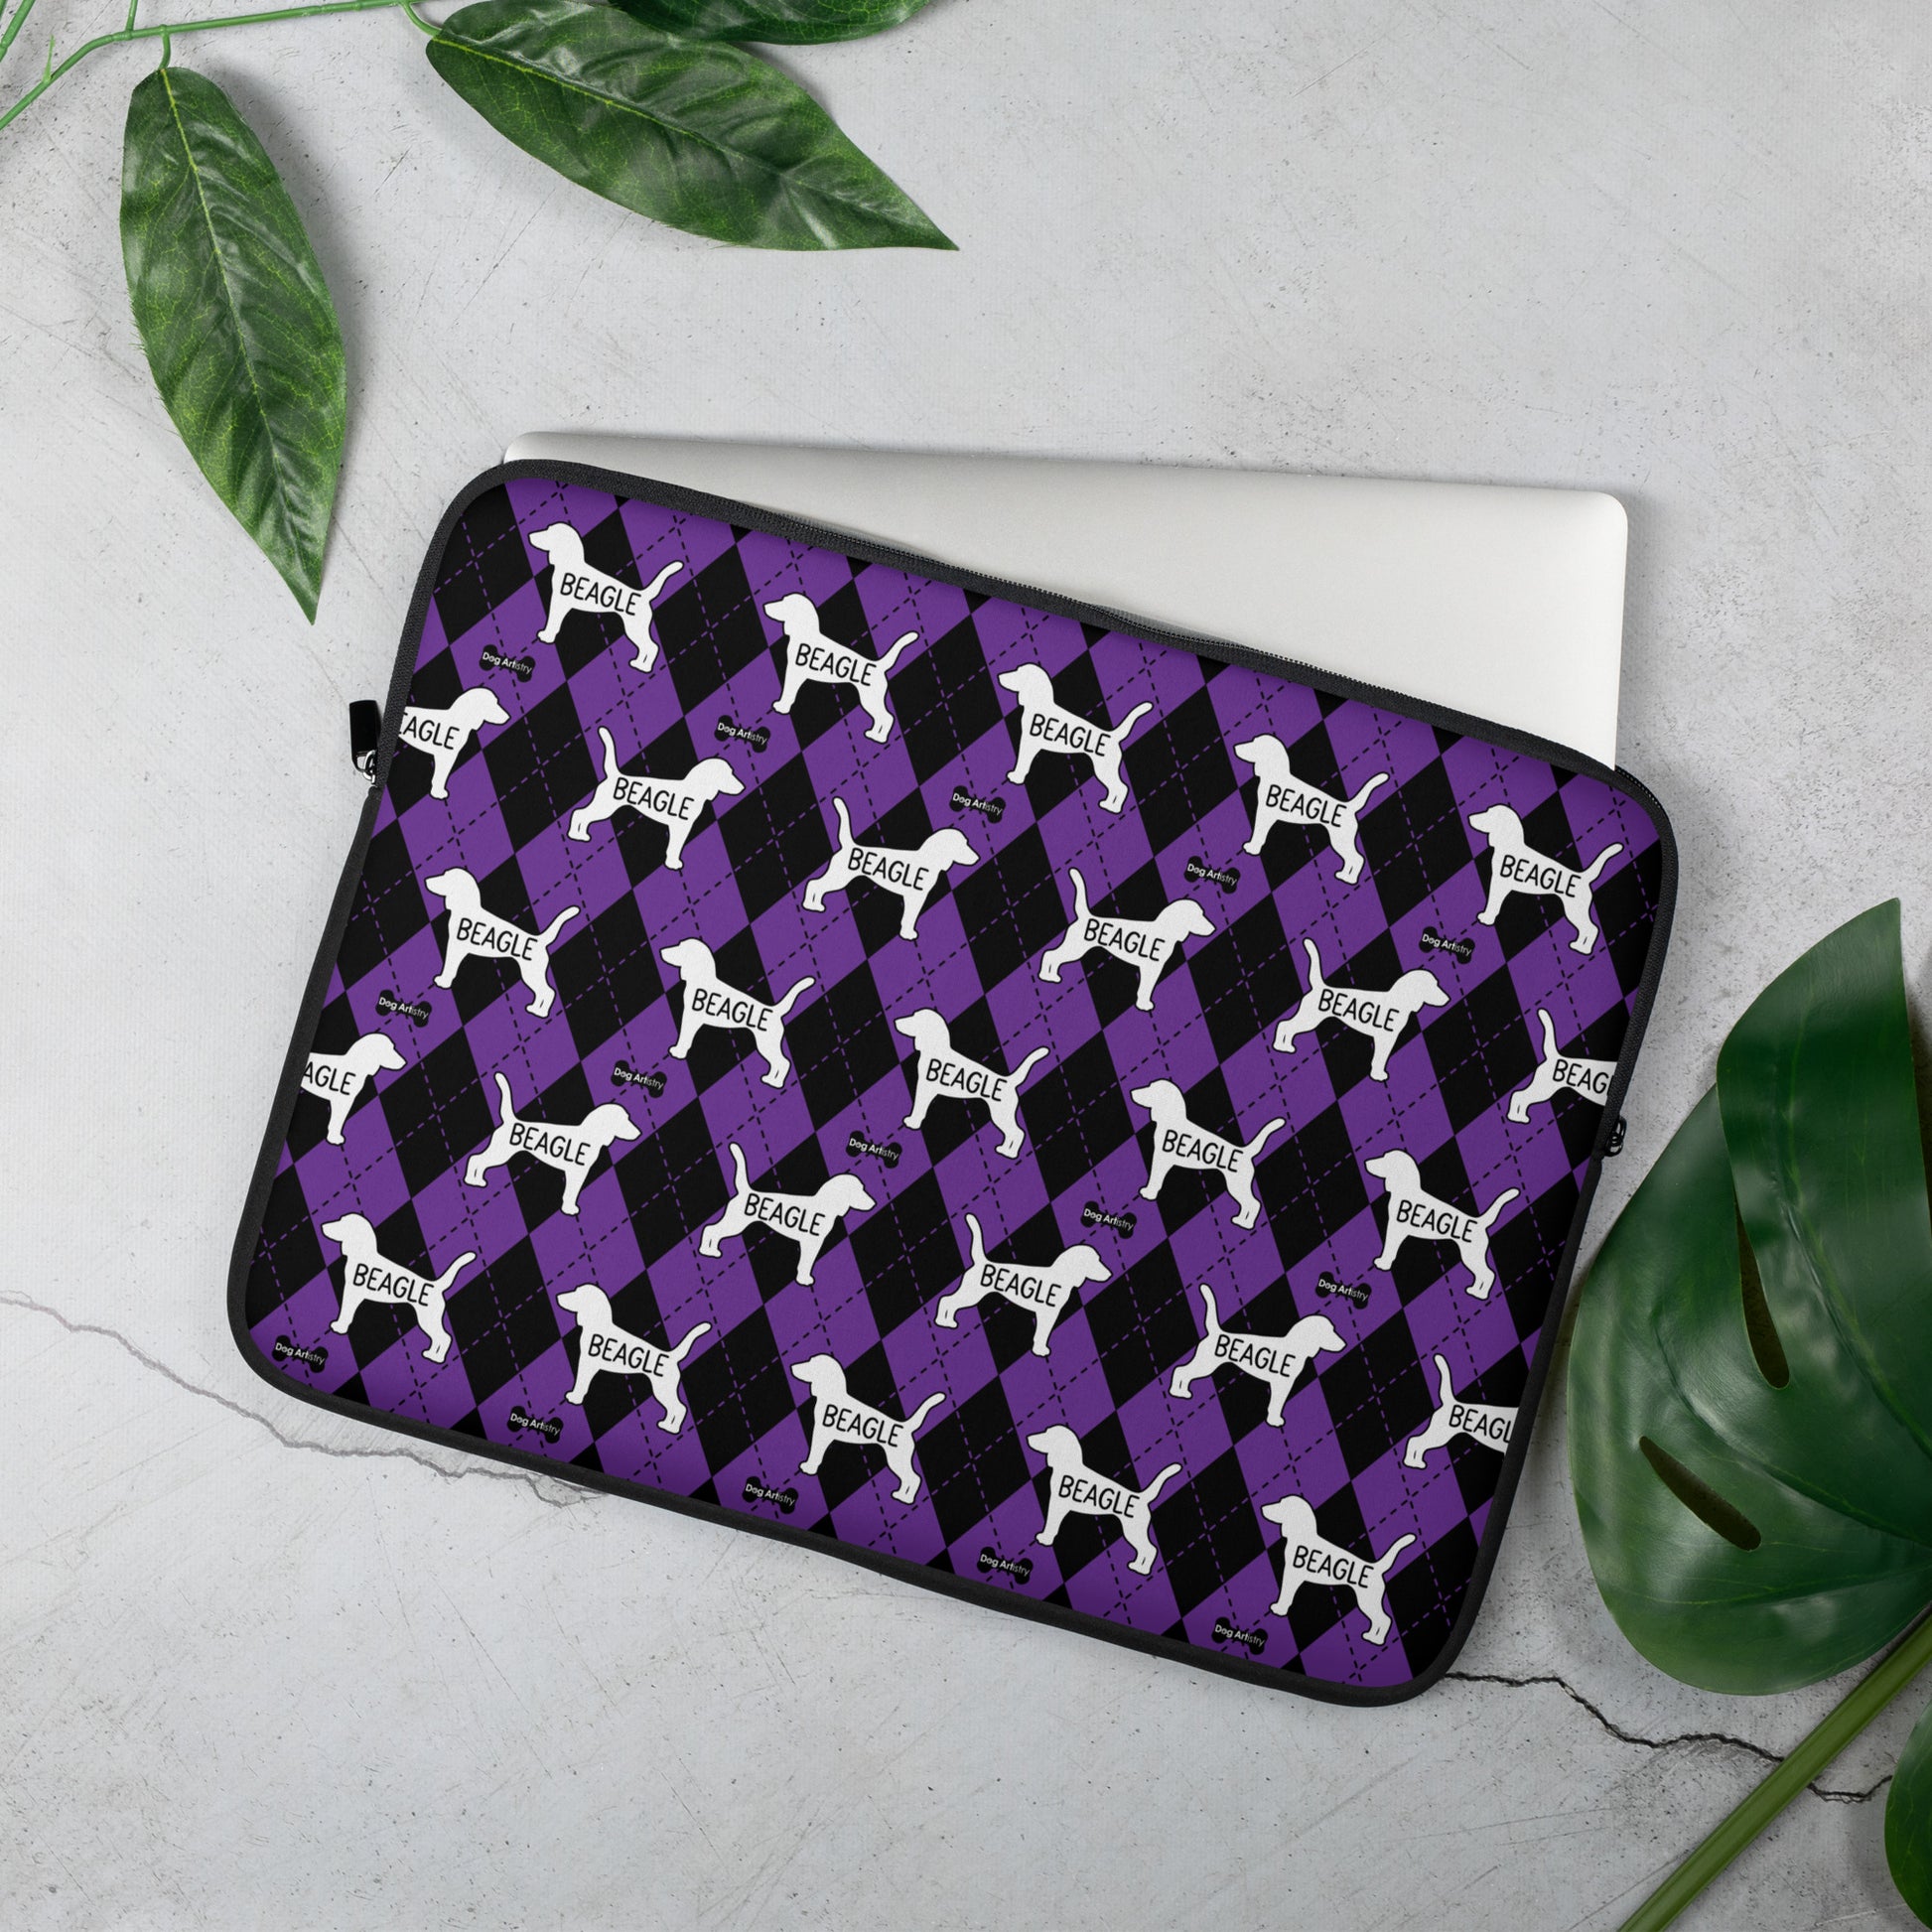 Beagle purple and black argyle laptop sleeve by Dog Artistry